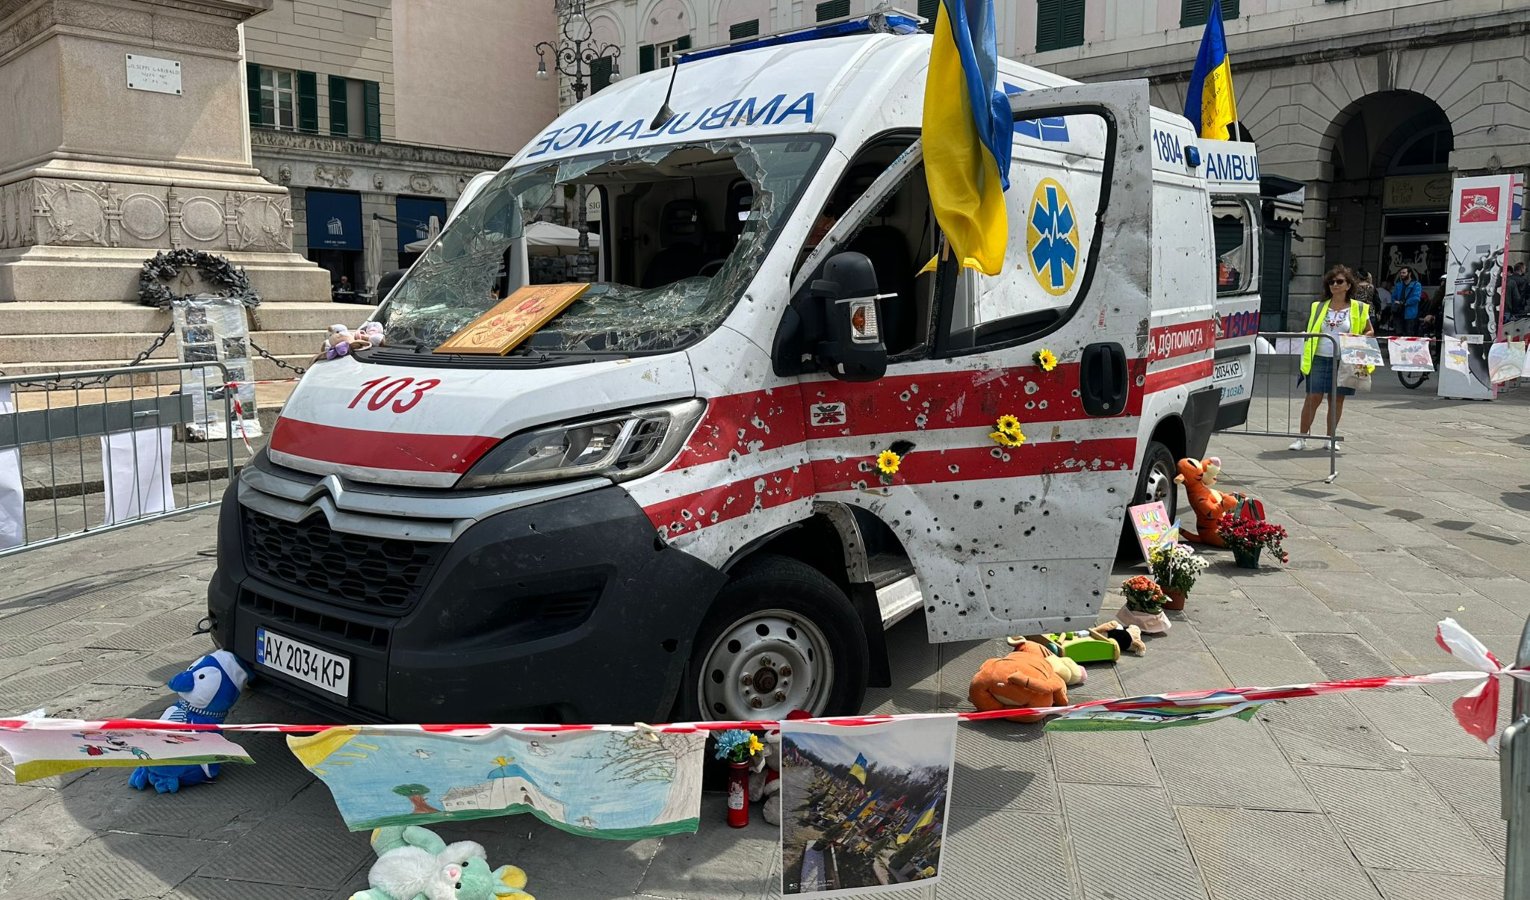 Guerra in Ucraina, a Genova un'ambulanza crivellata: 